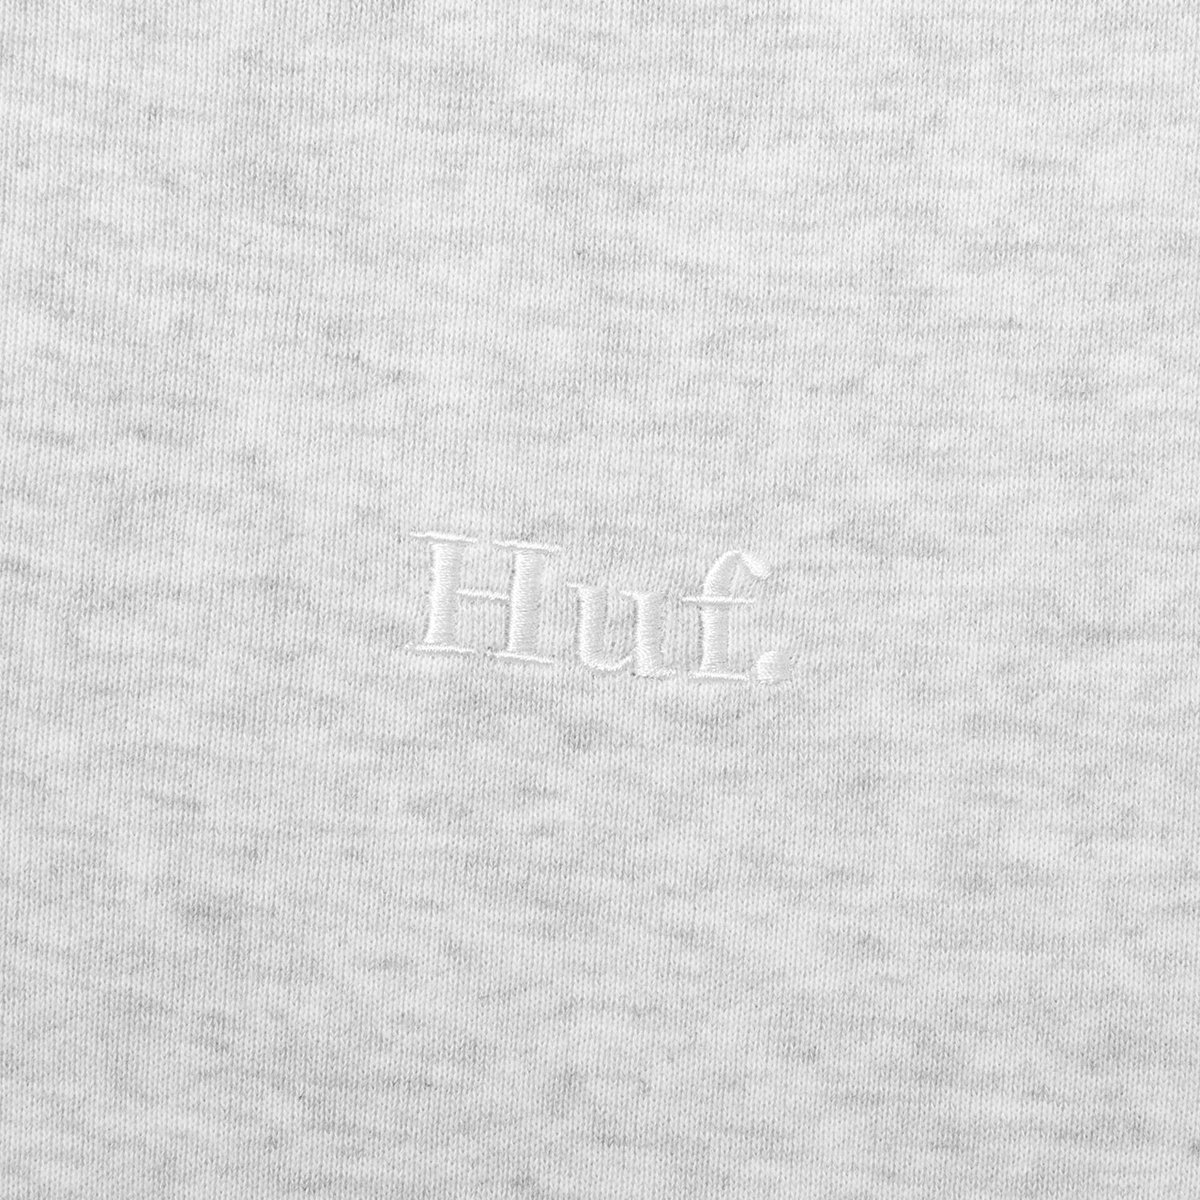 HUF(ハフ) |HUF - CONVERSION ZIP FLEECE (Ash Grey)